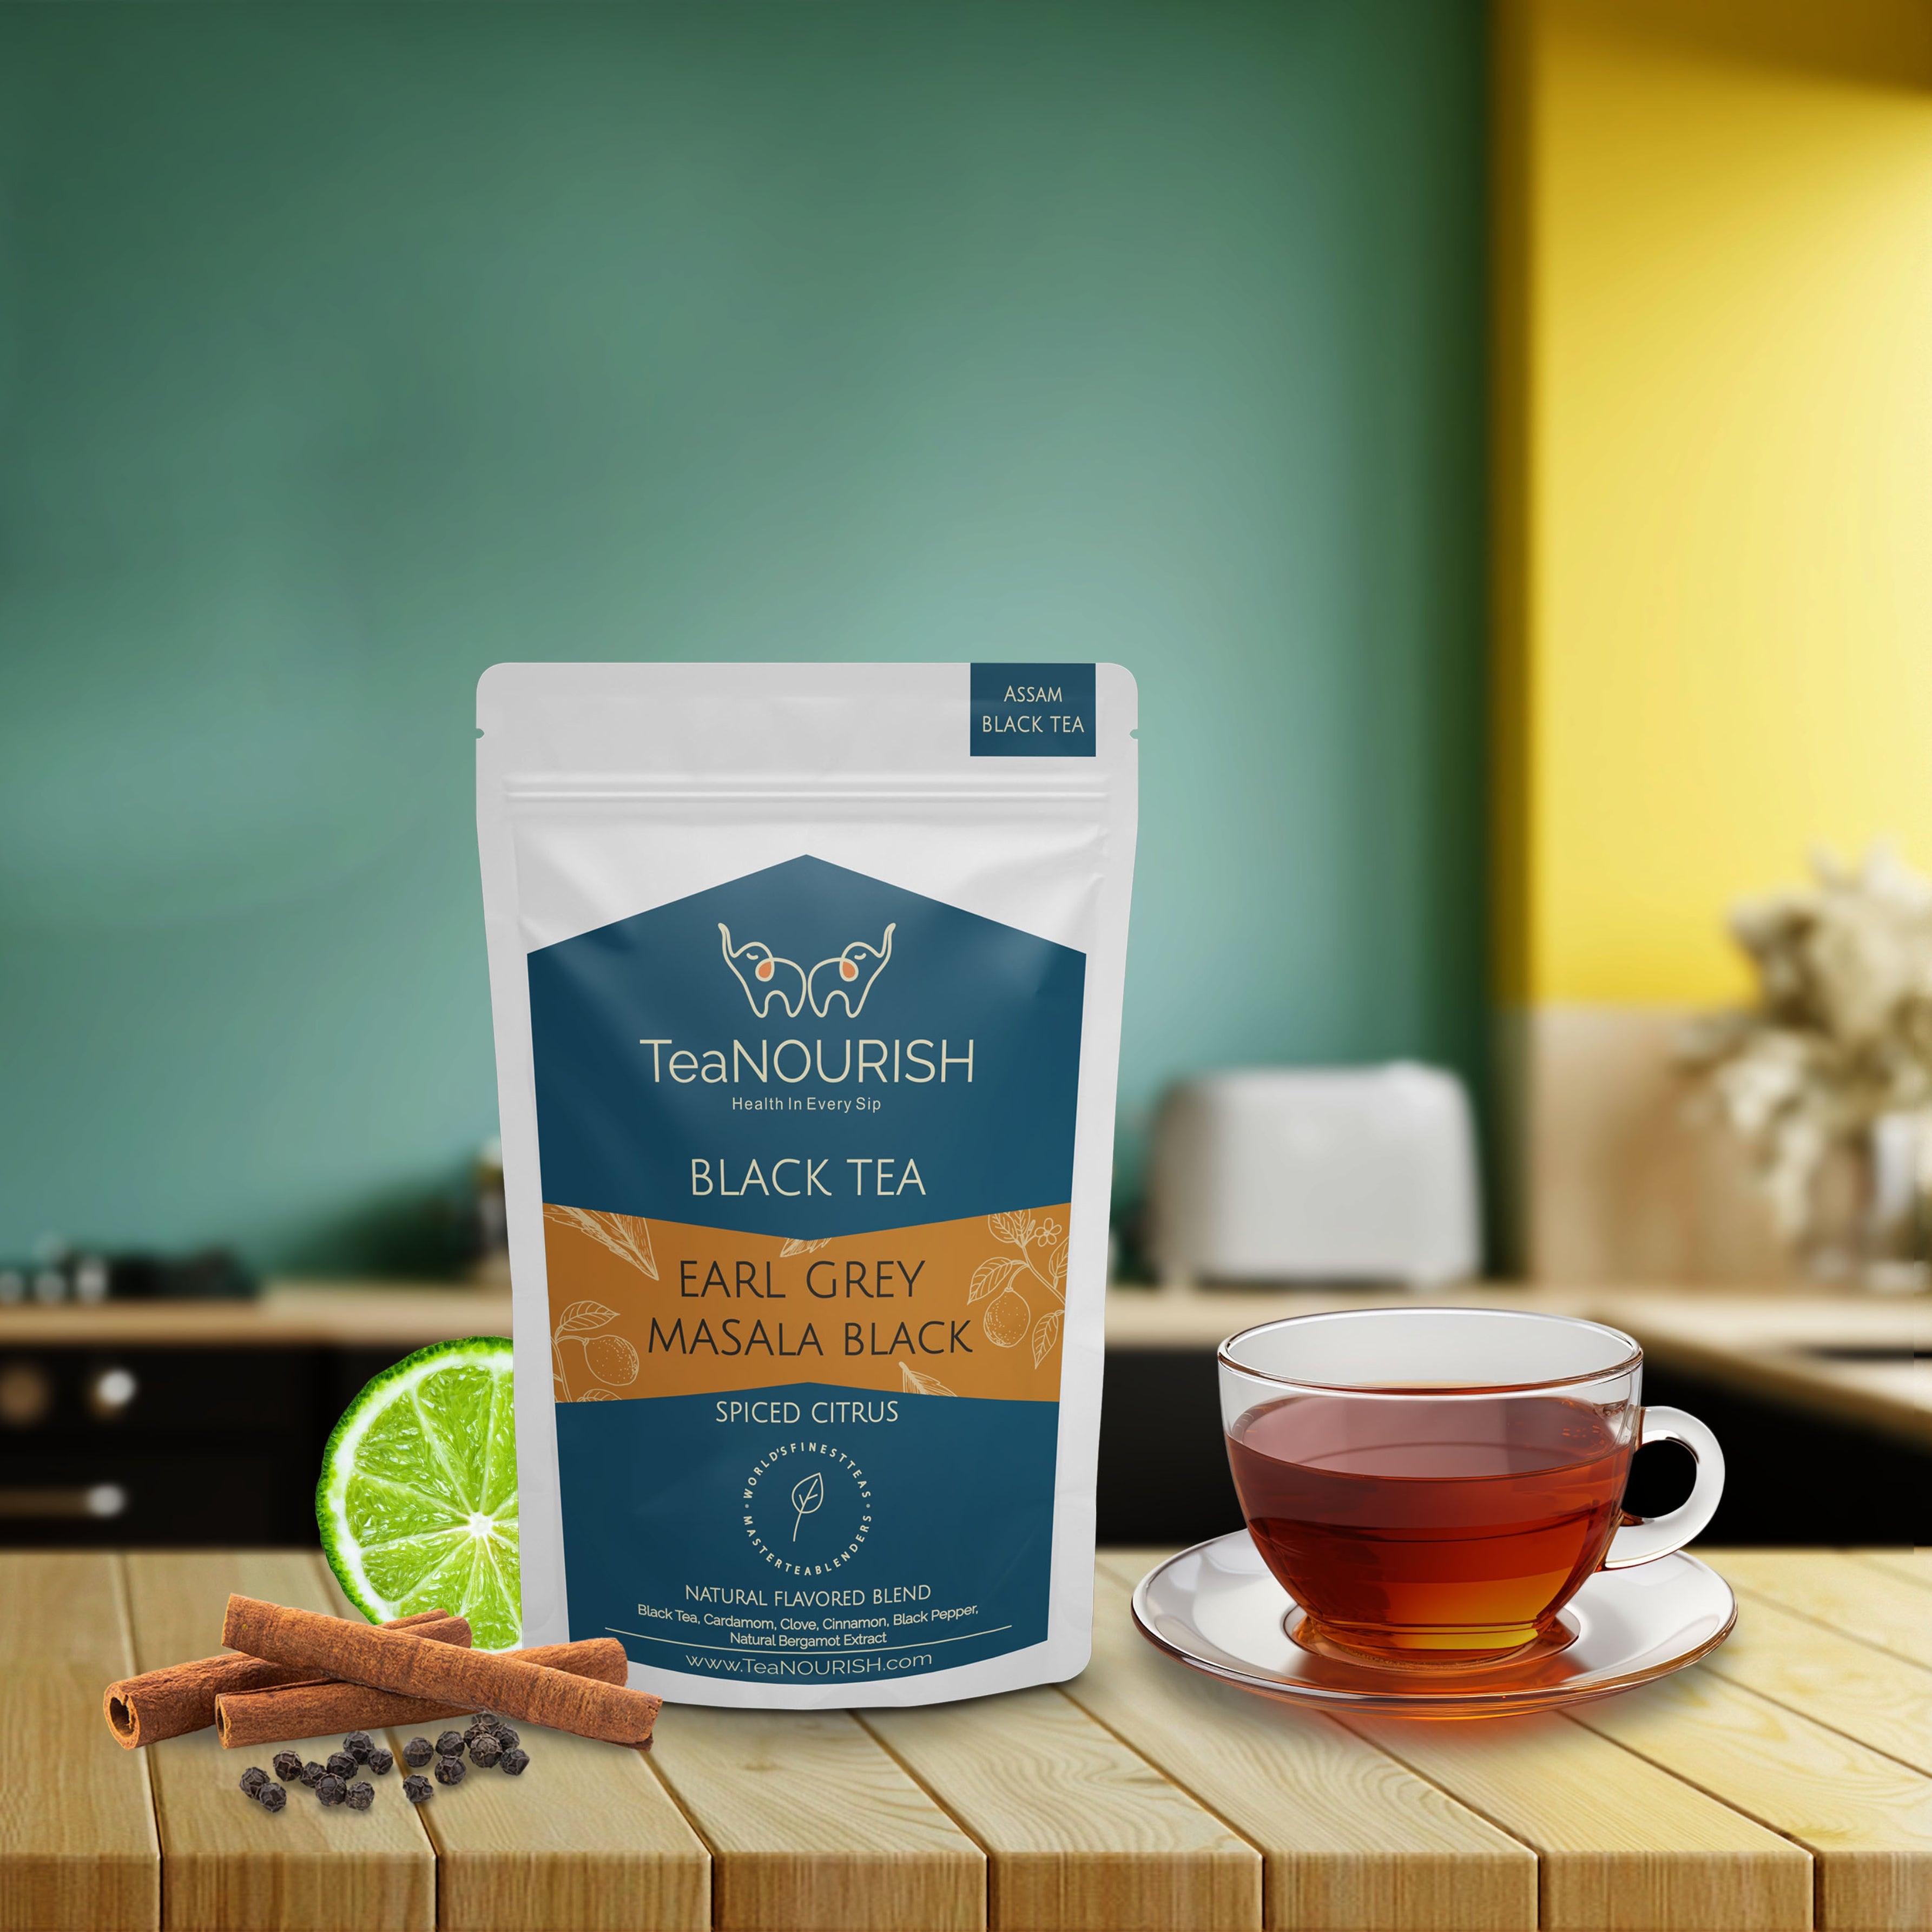 earl grey tea benefits